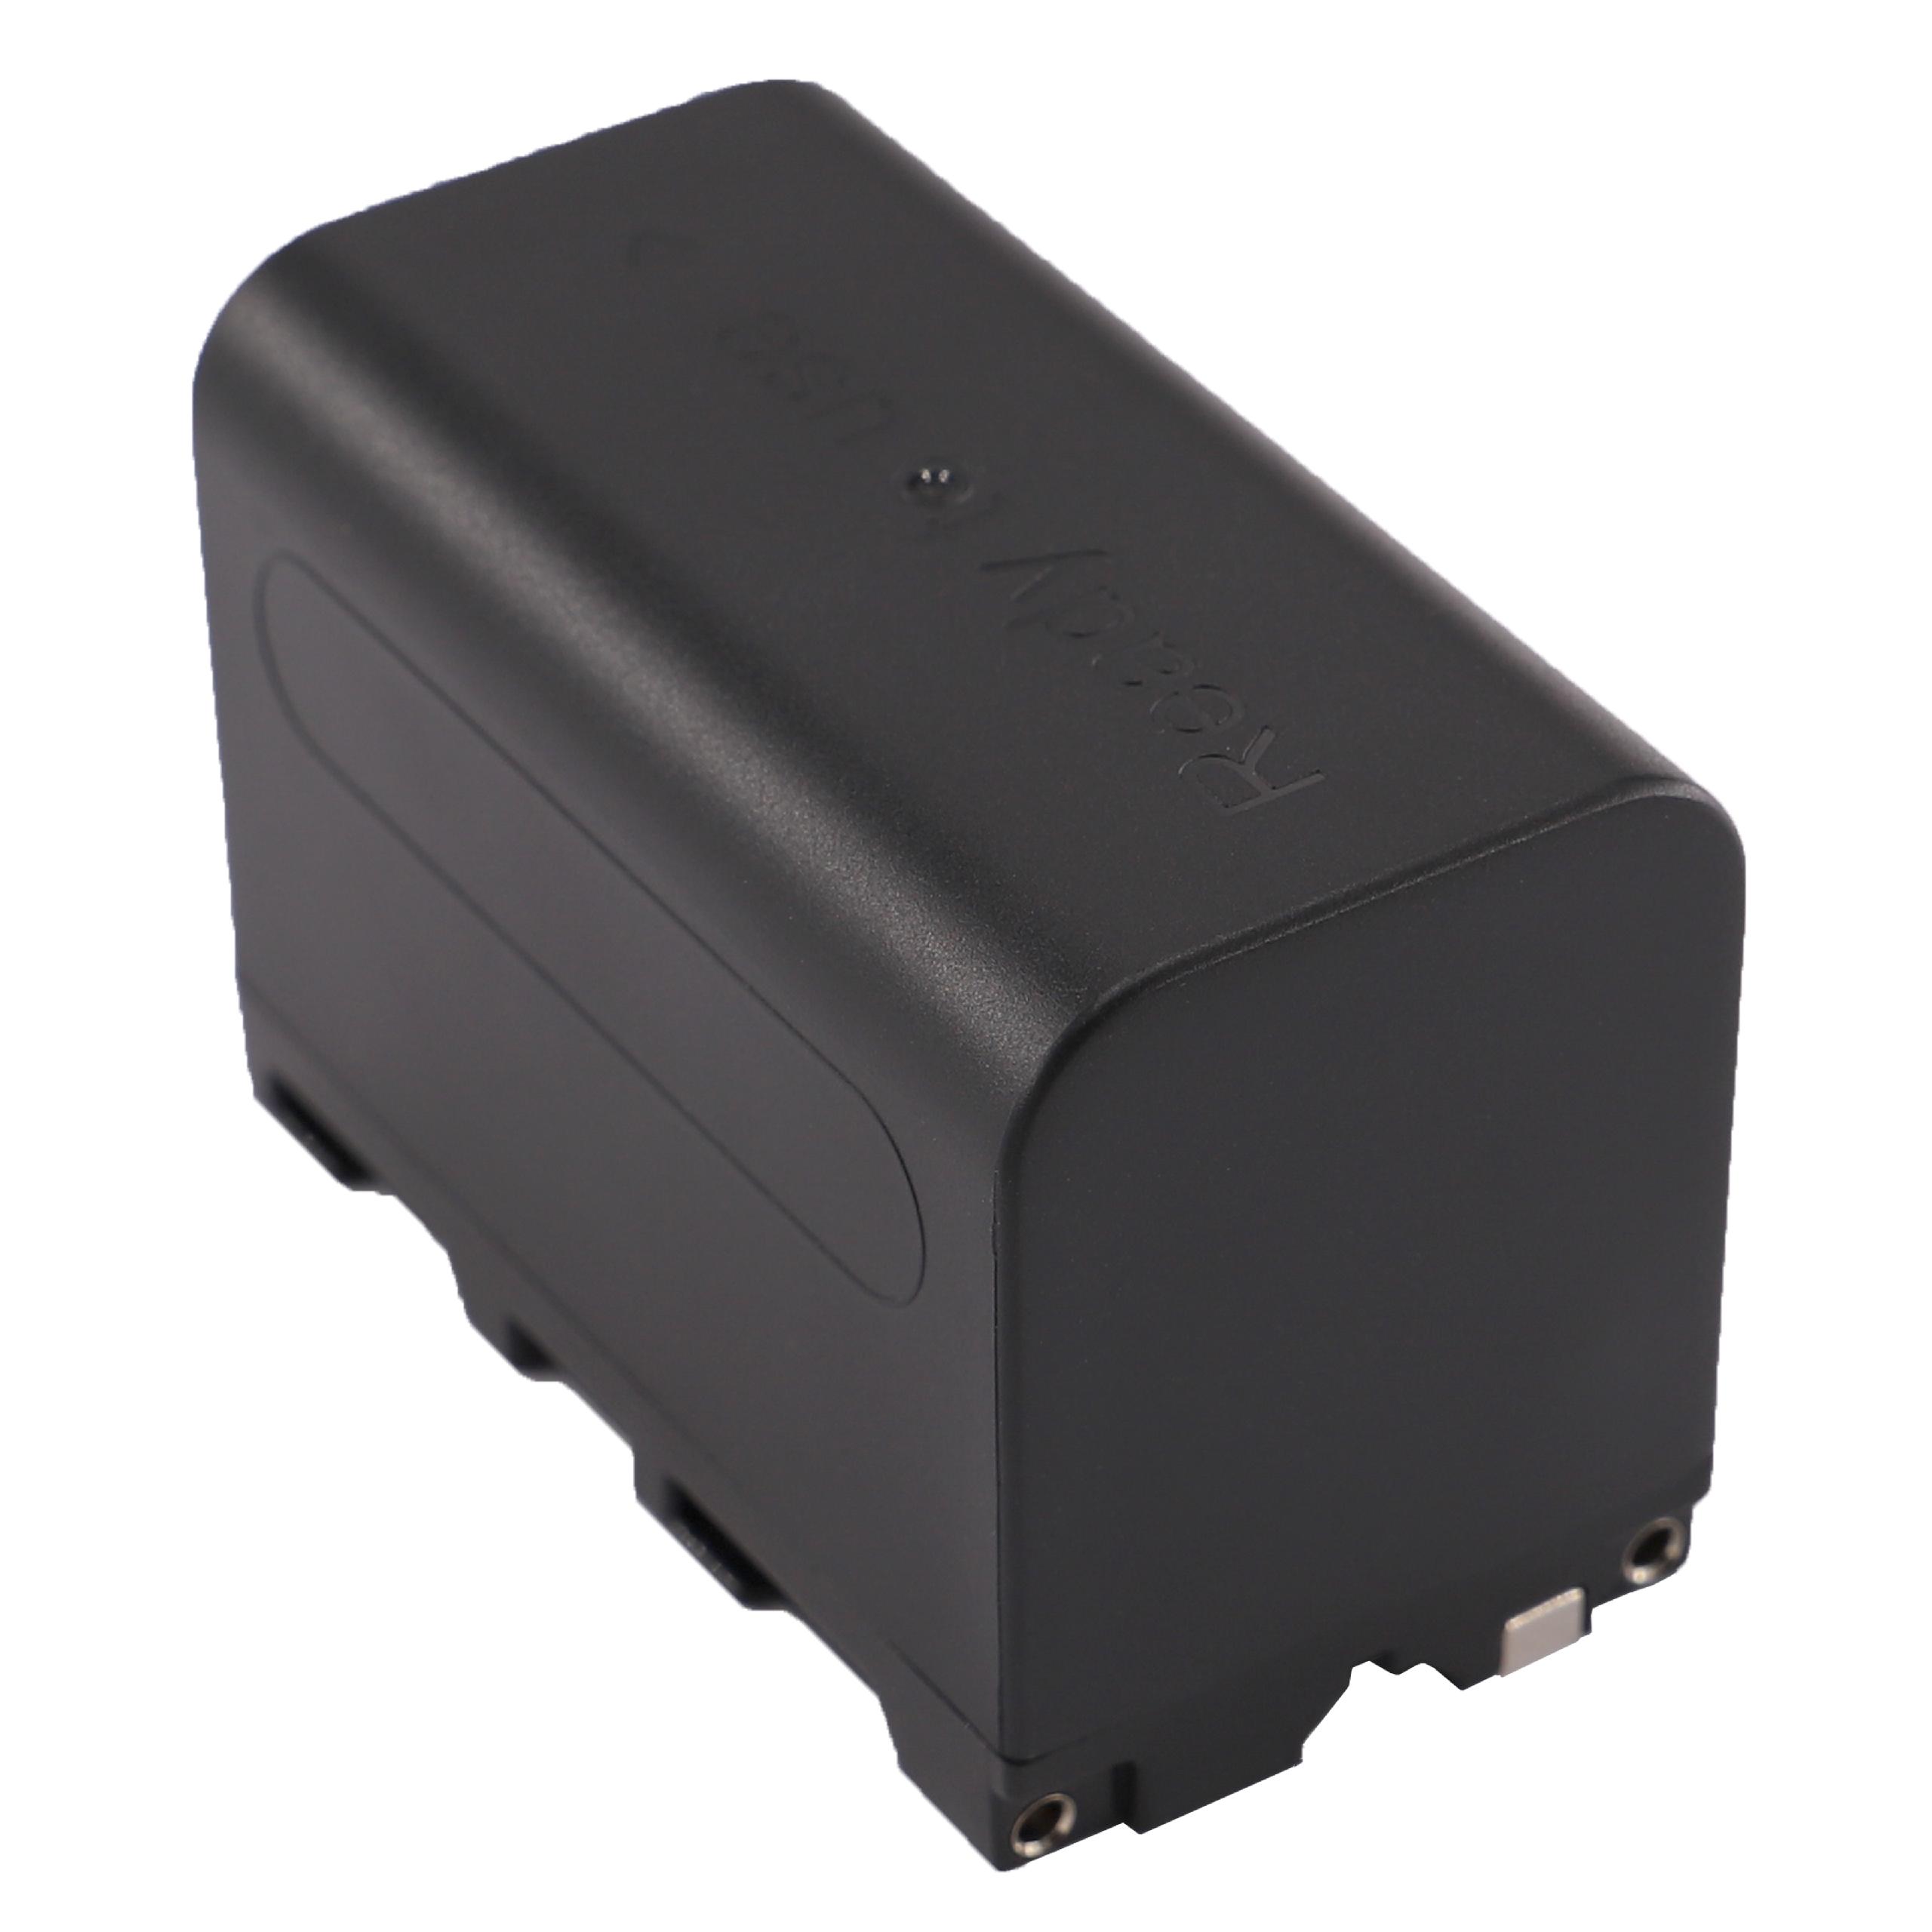 Akumulator do aparatu cyfrowego zamiennik Sony NP-F950, NP-F930/B, NP-F930, NP-F750 - 4000 mAh 7,4 V Li-Ion